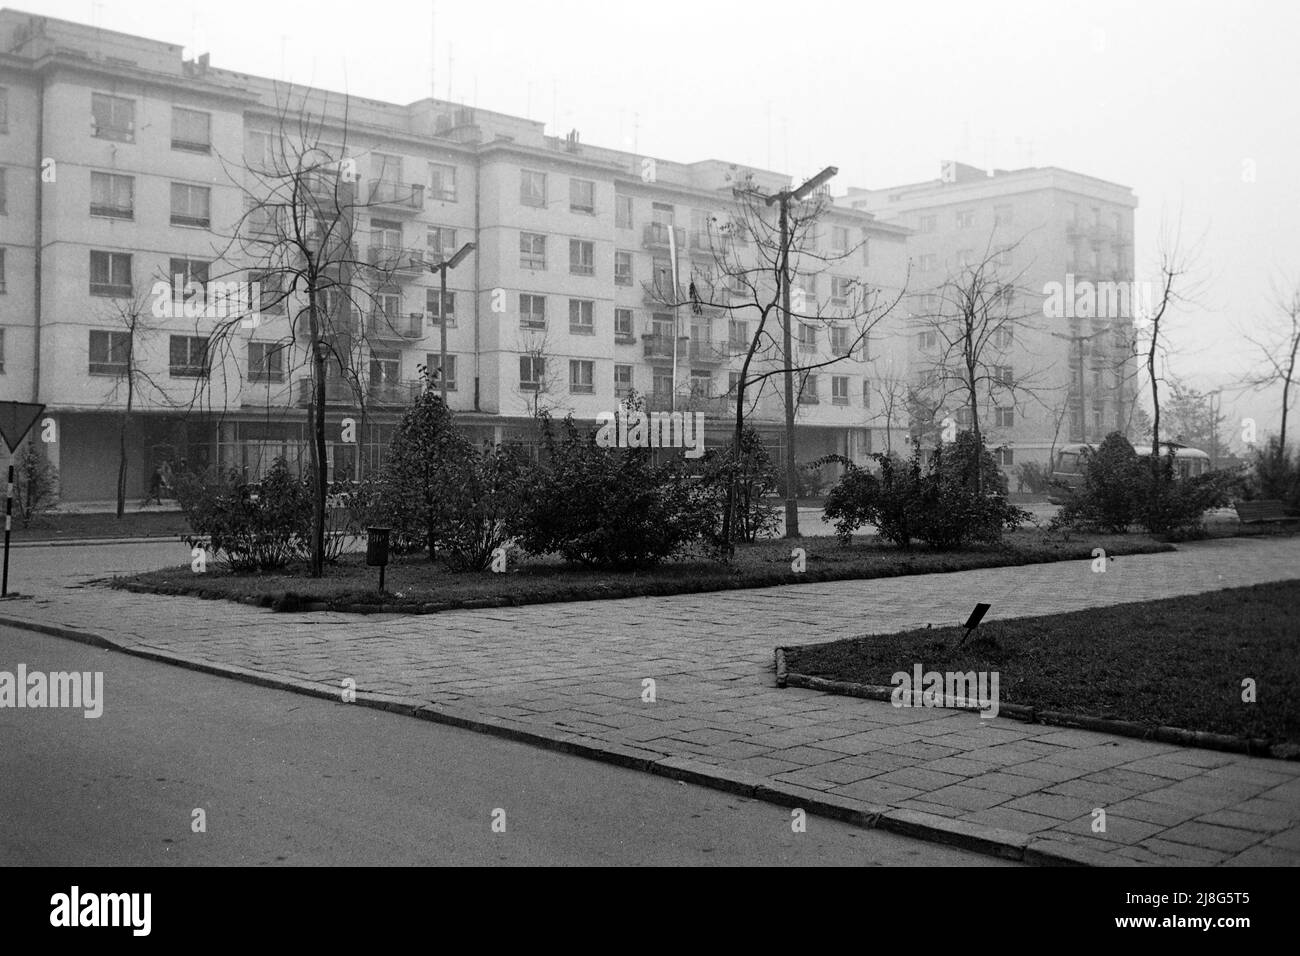 Wohngebiet in Krakau, Woiwodschaft Kleinpolen, 1967. Residential area in Kraków, Lesser Polonia Vovoideship, 1967. Stock Photo